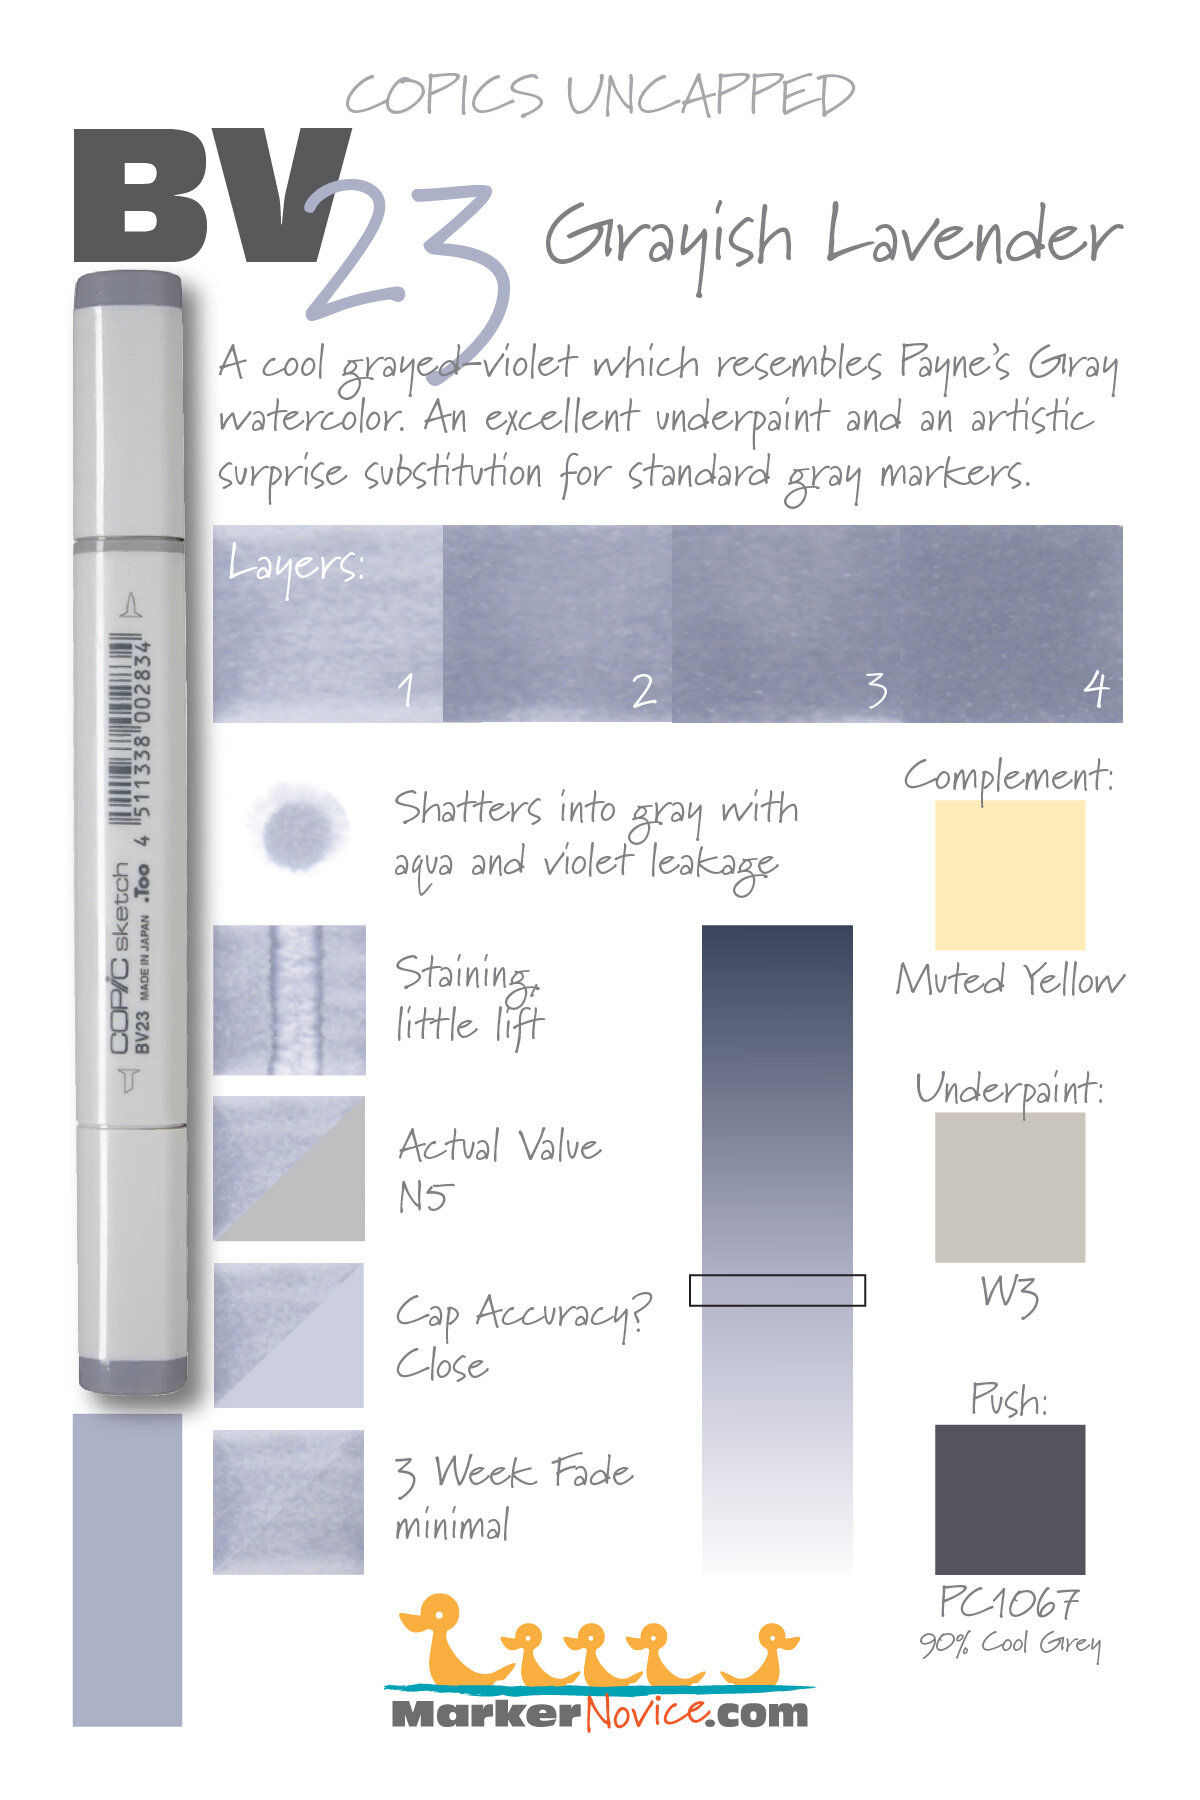 Wesfair® Latte Art Pen - Grey Technologies